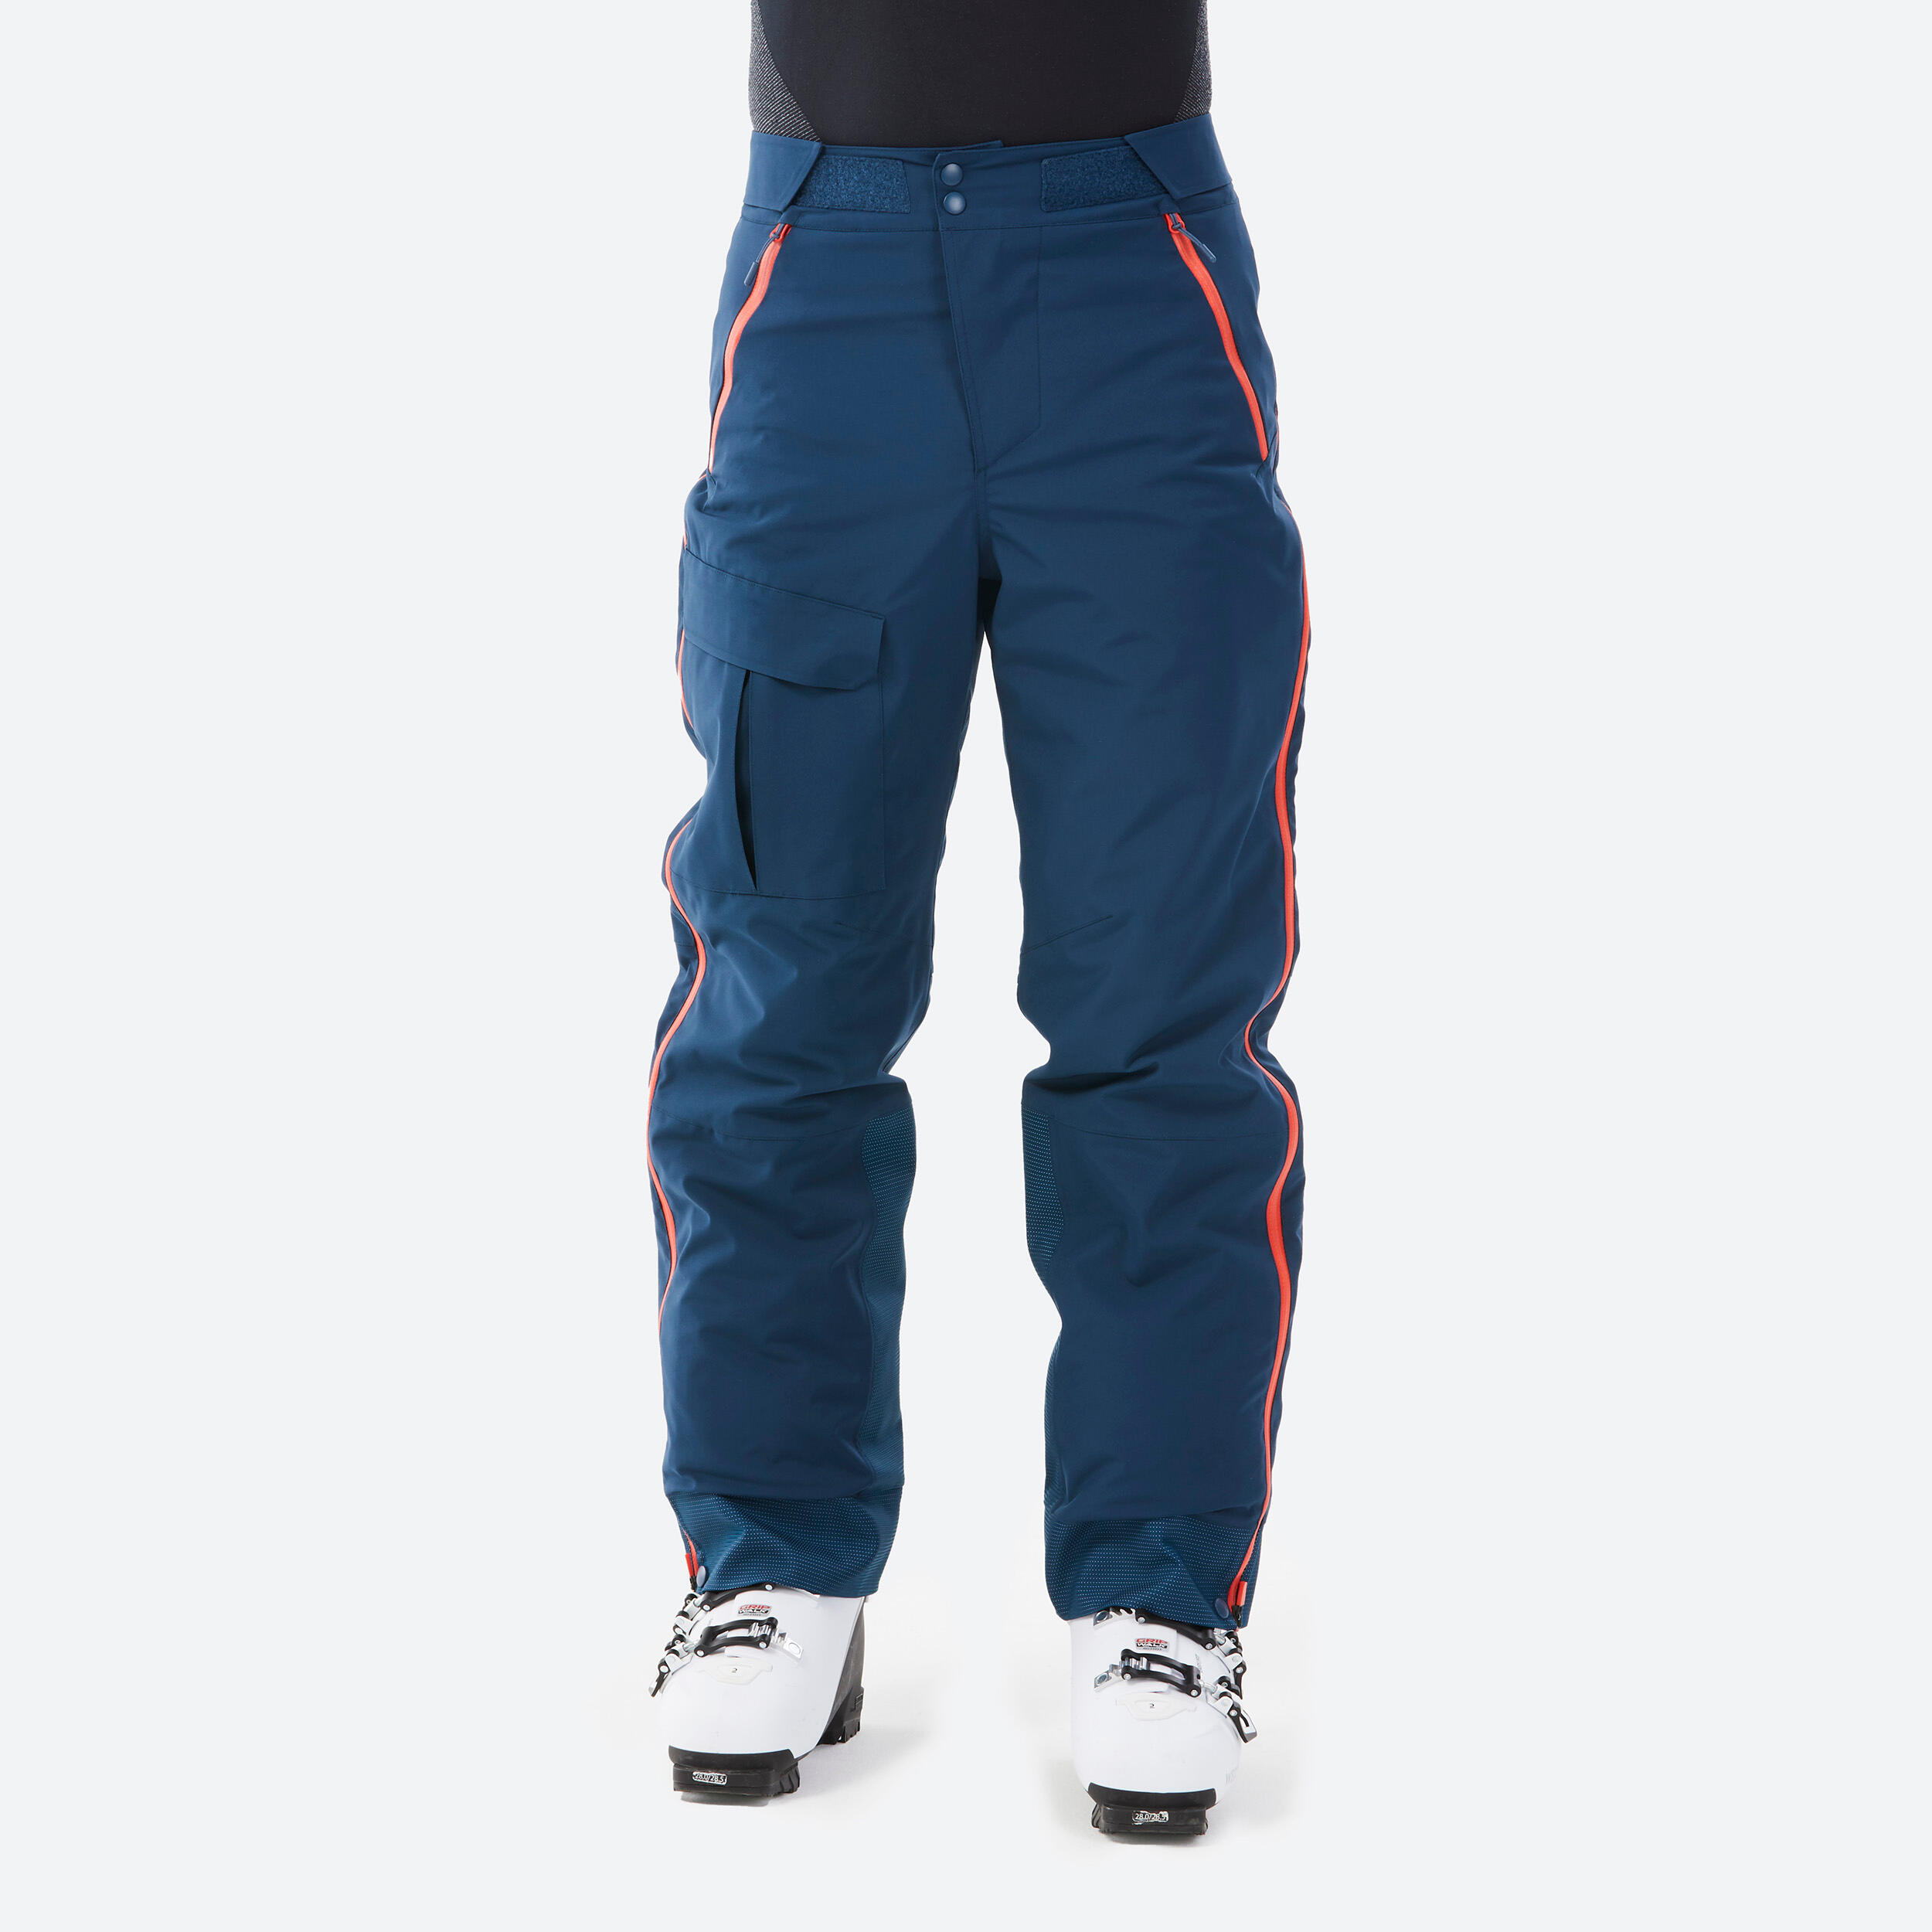 Pantalon Schi 500 Sport Albastru Inchis Unisex